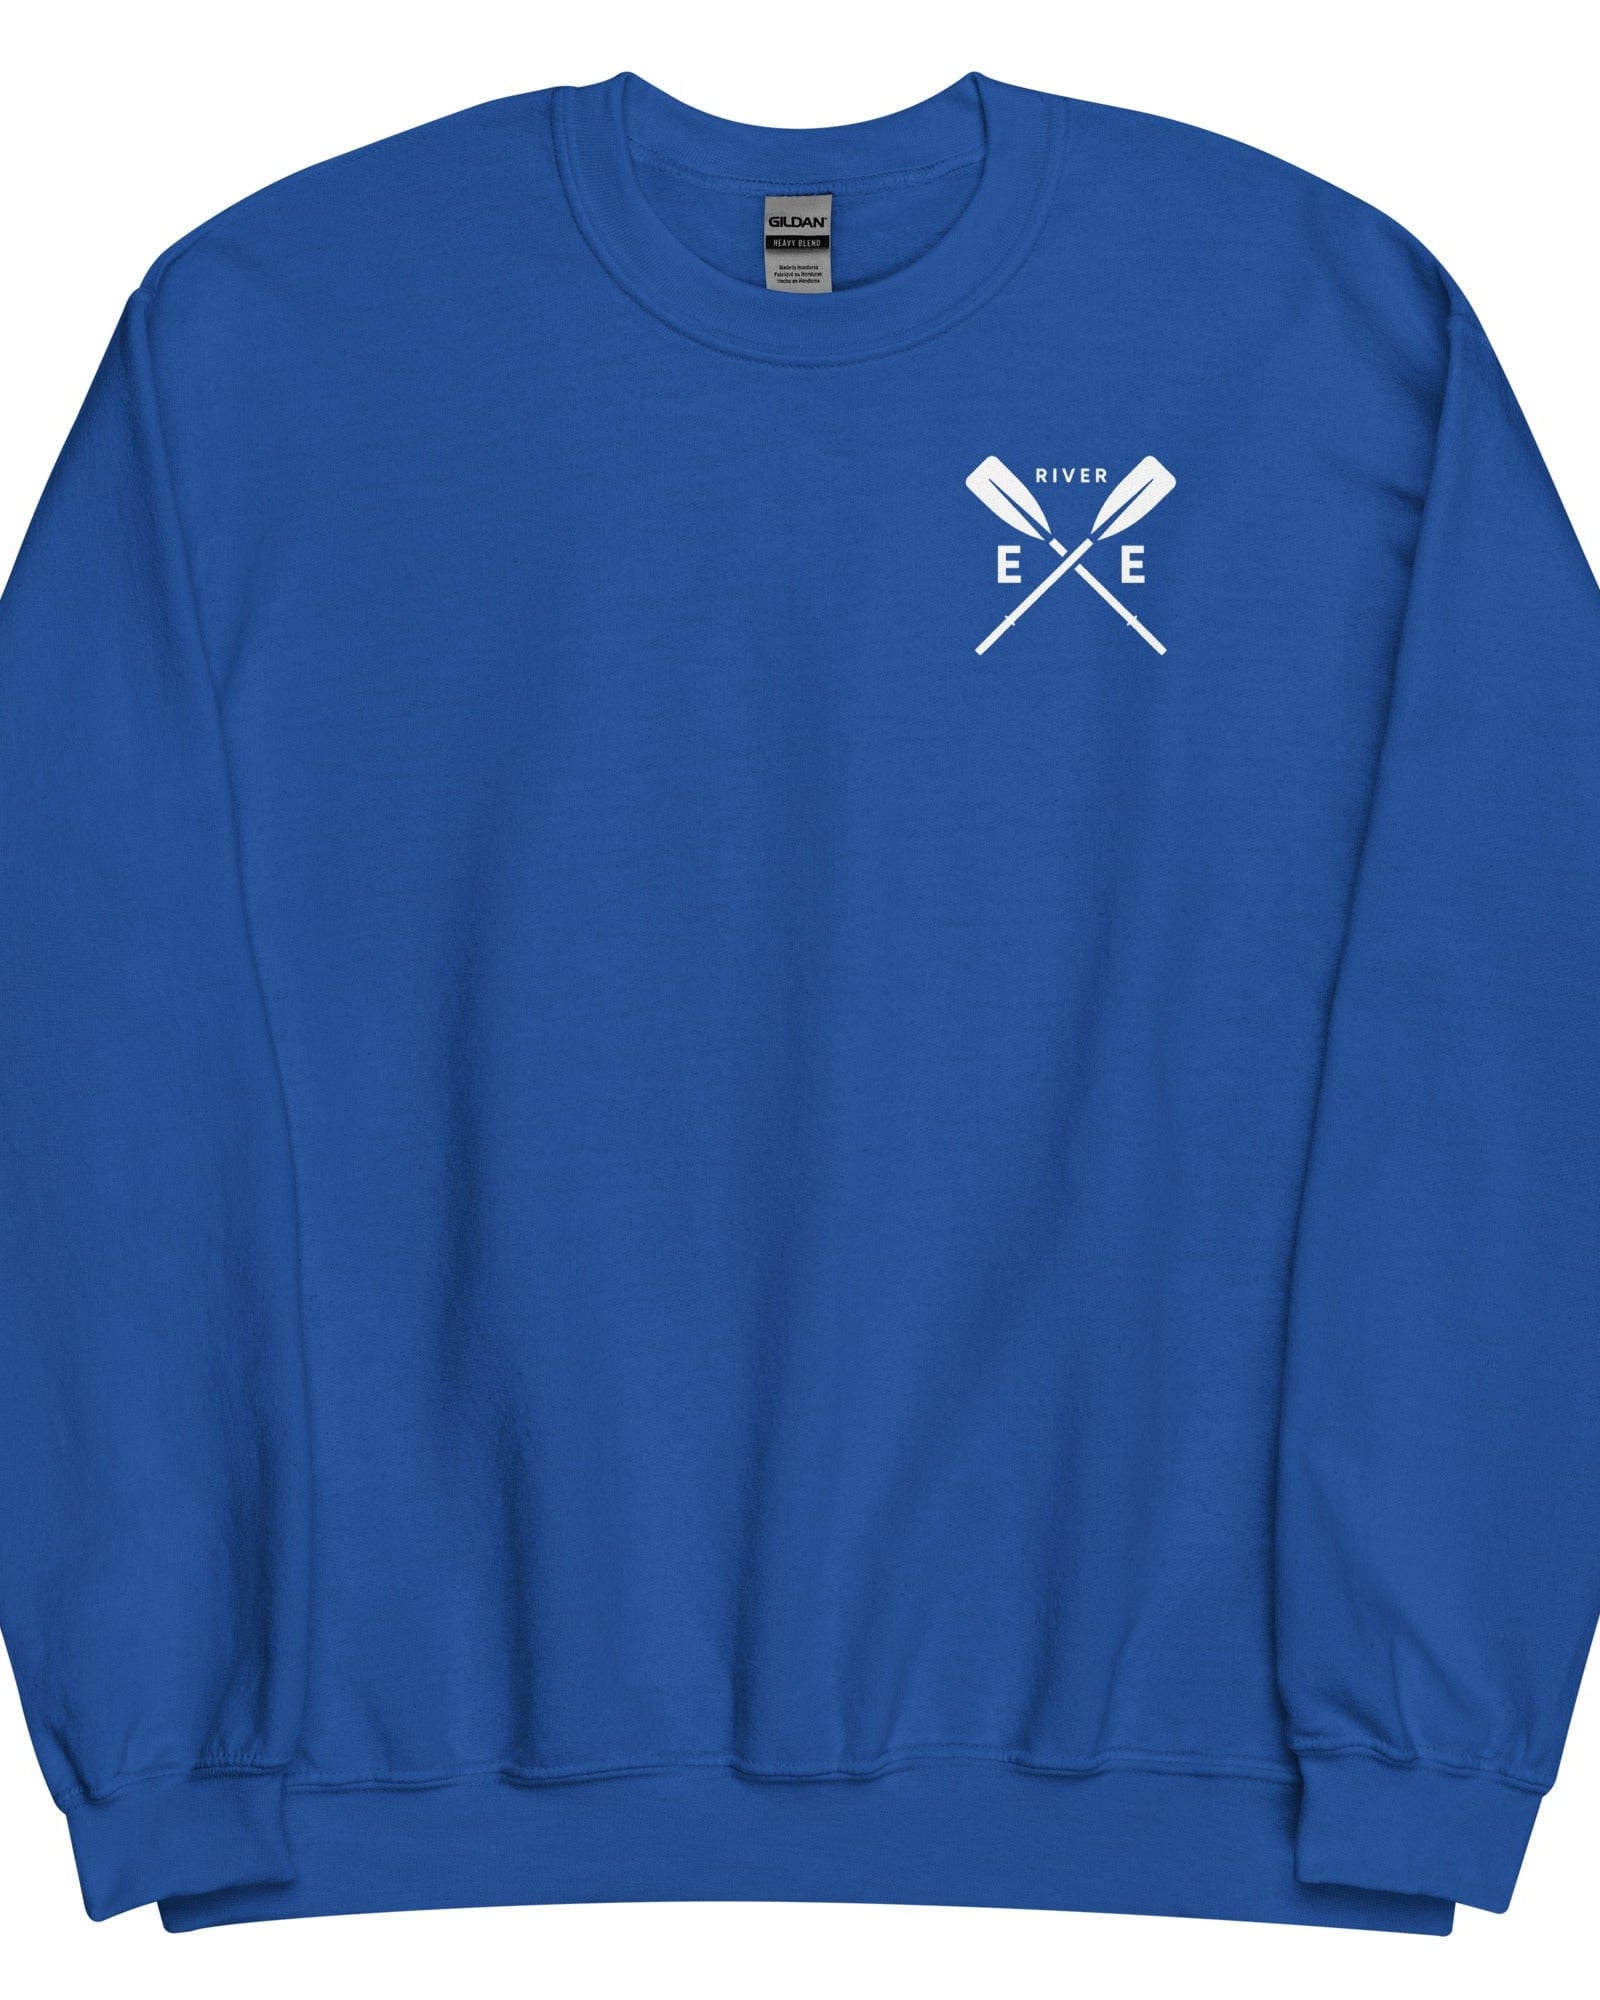 River Exe Sweatshirt Jumper | Exeter Gift Shop Royal / S Sweatshirt Jolly & Goode